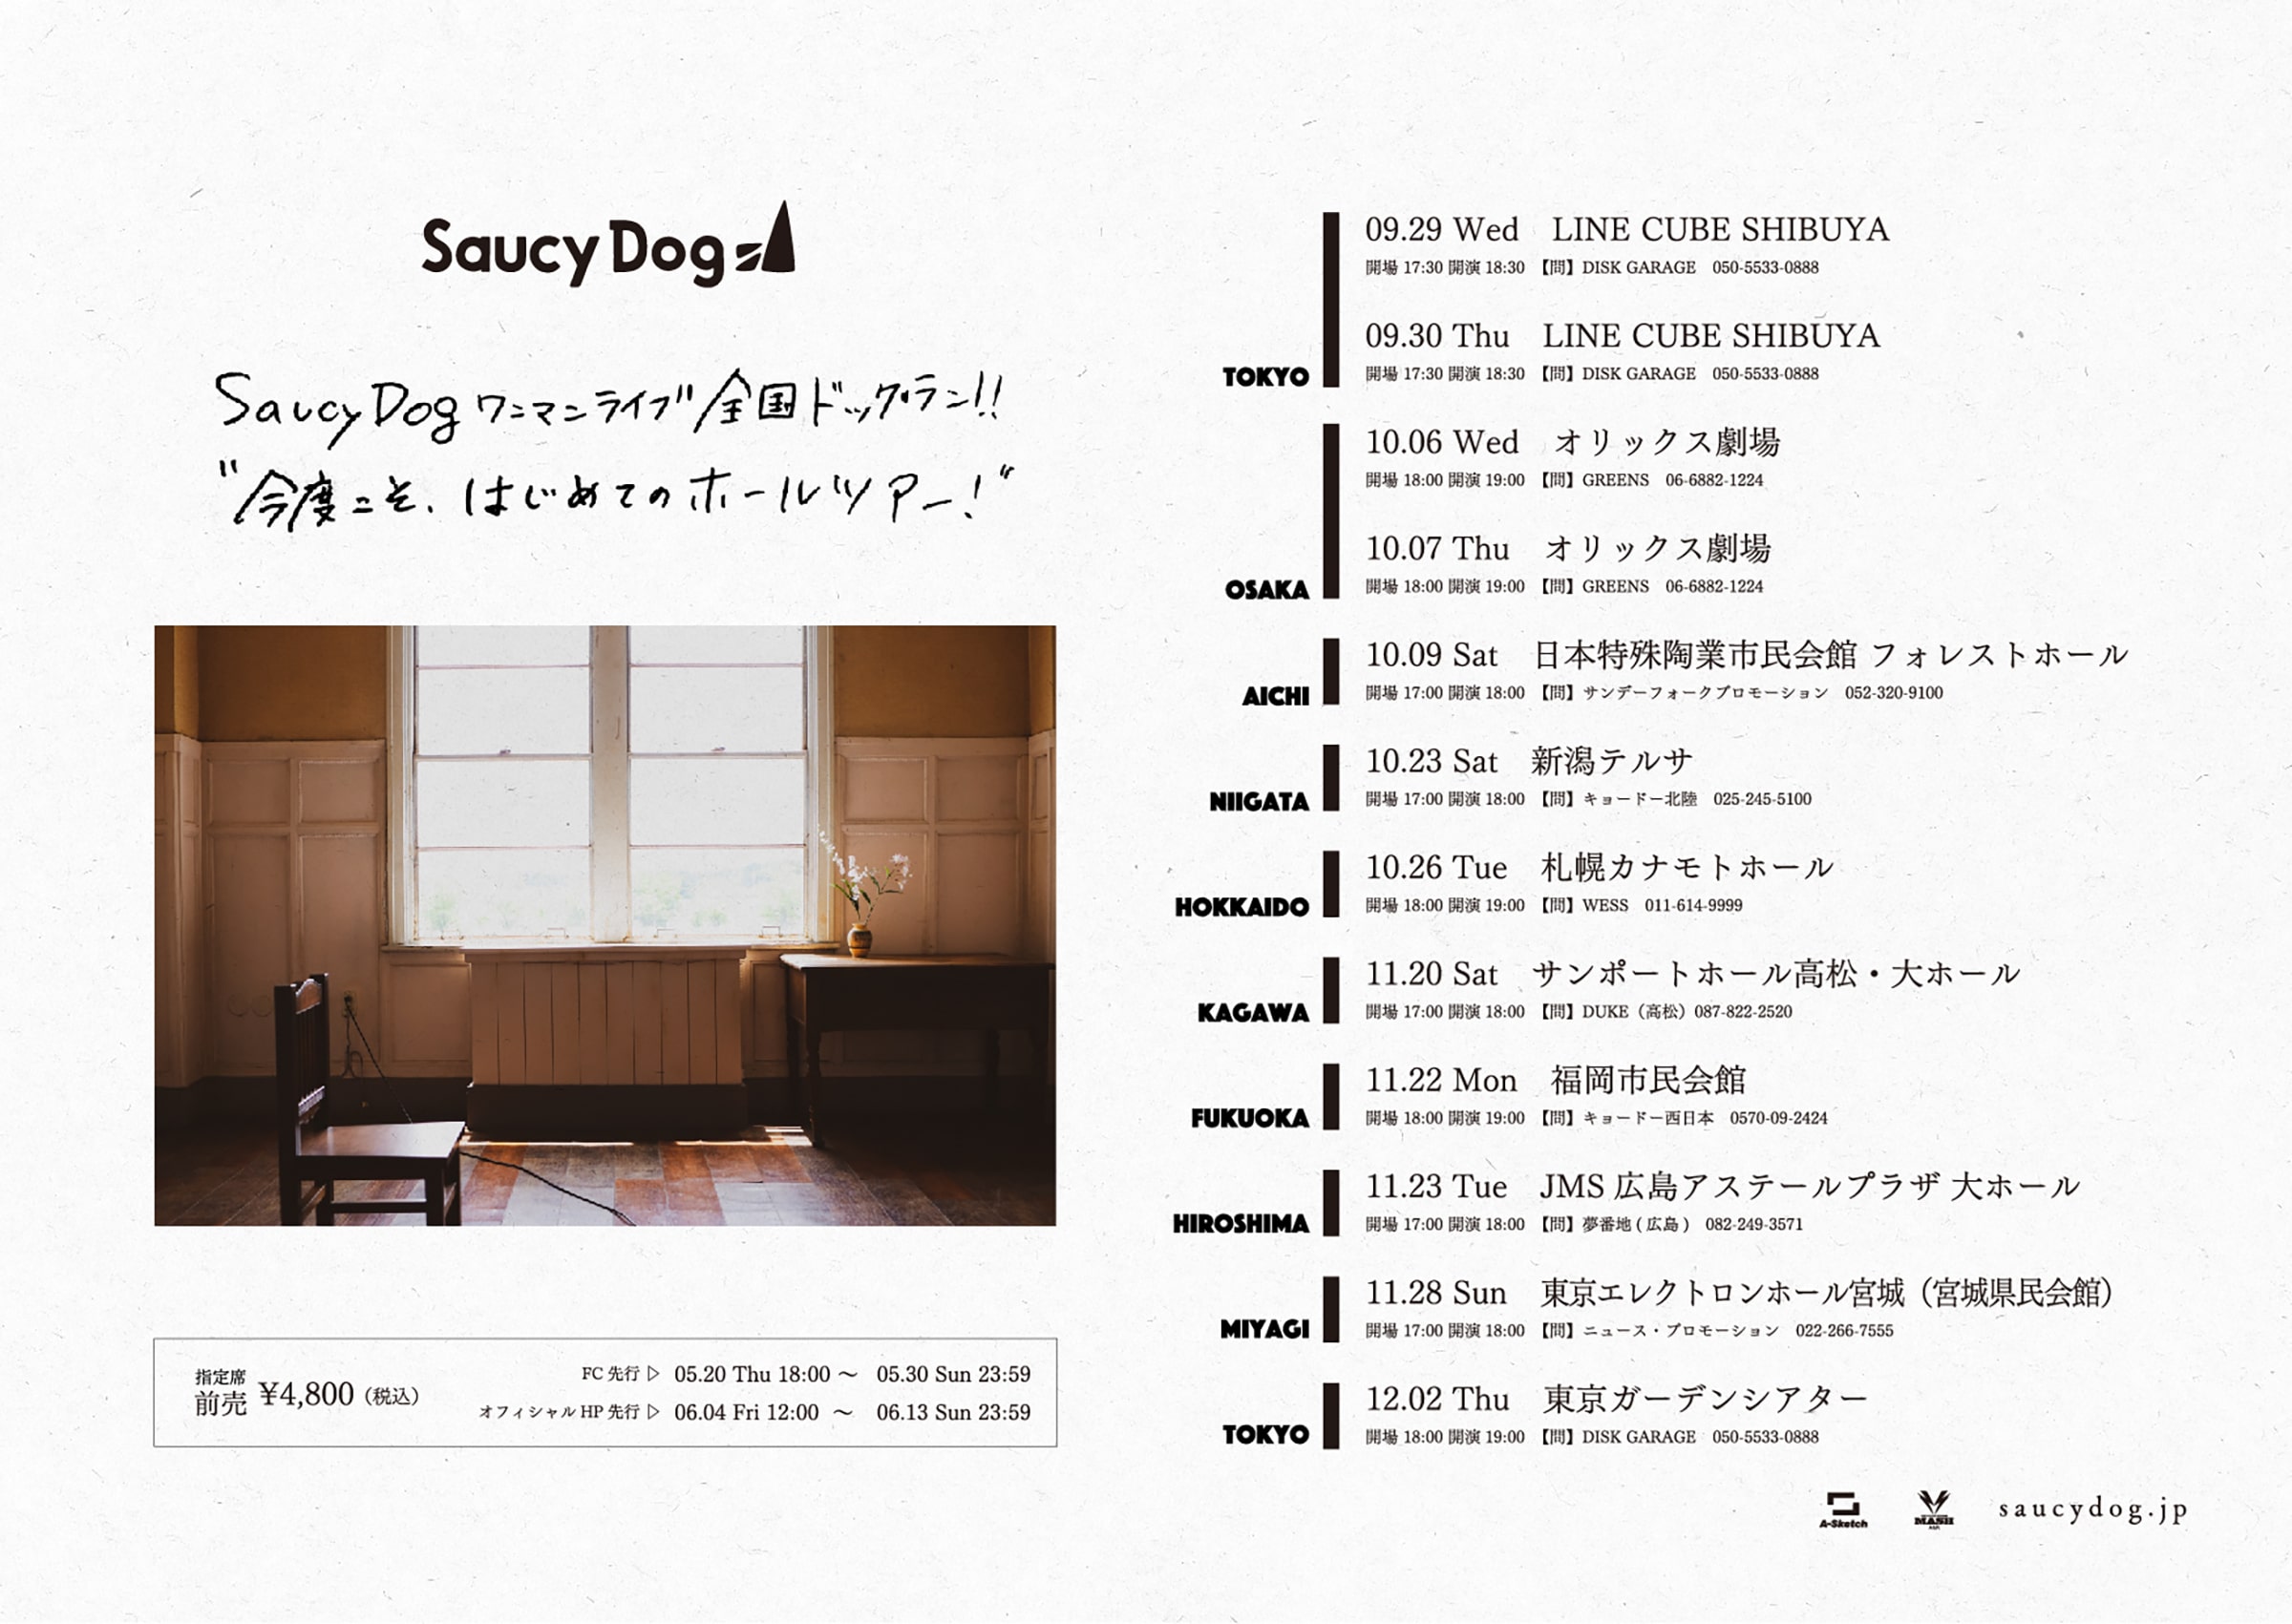 Saucy Dog ワンマンライブ 全国ドッグラン!!